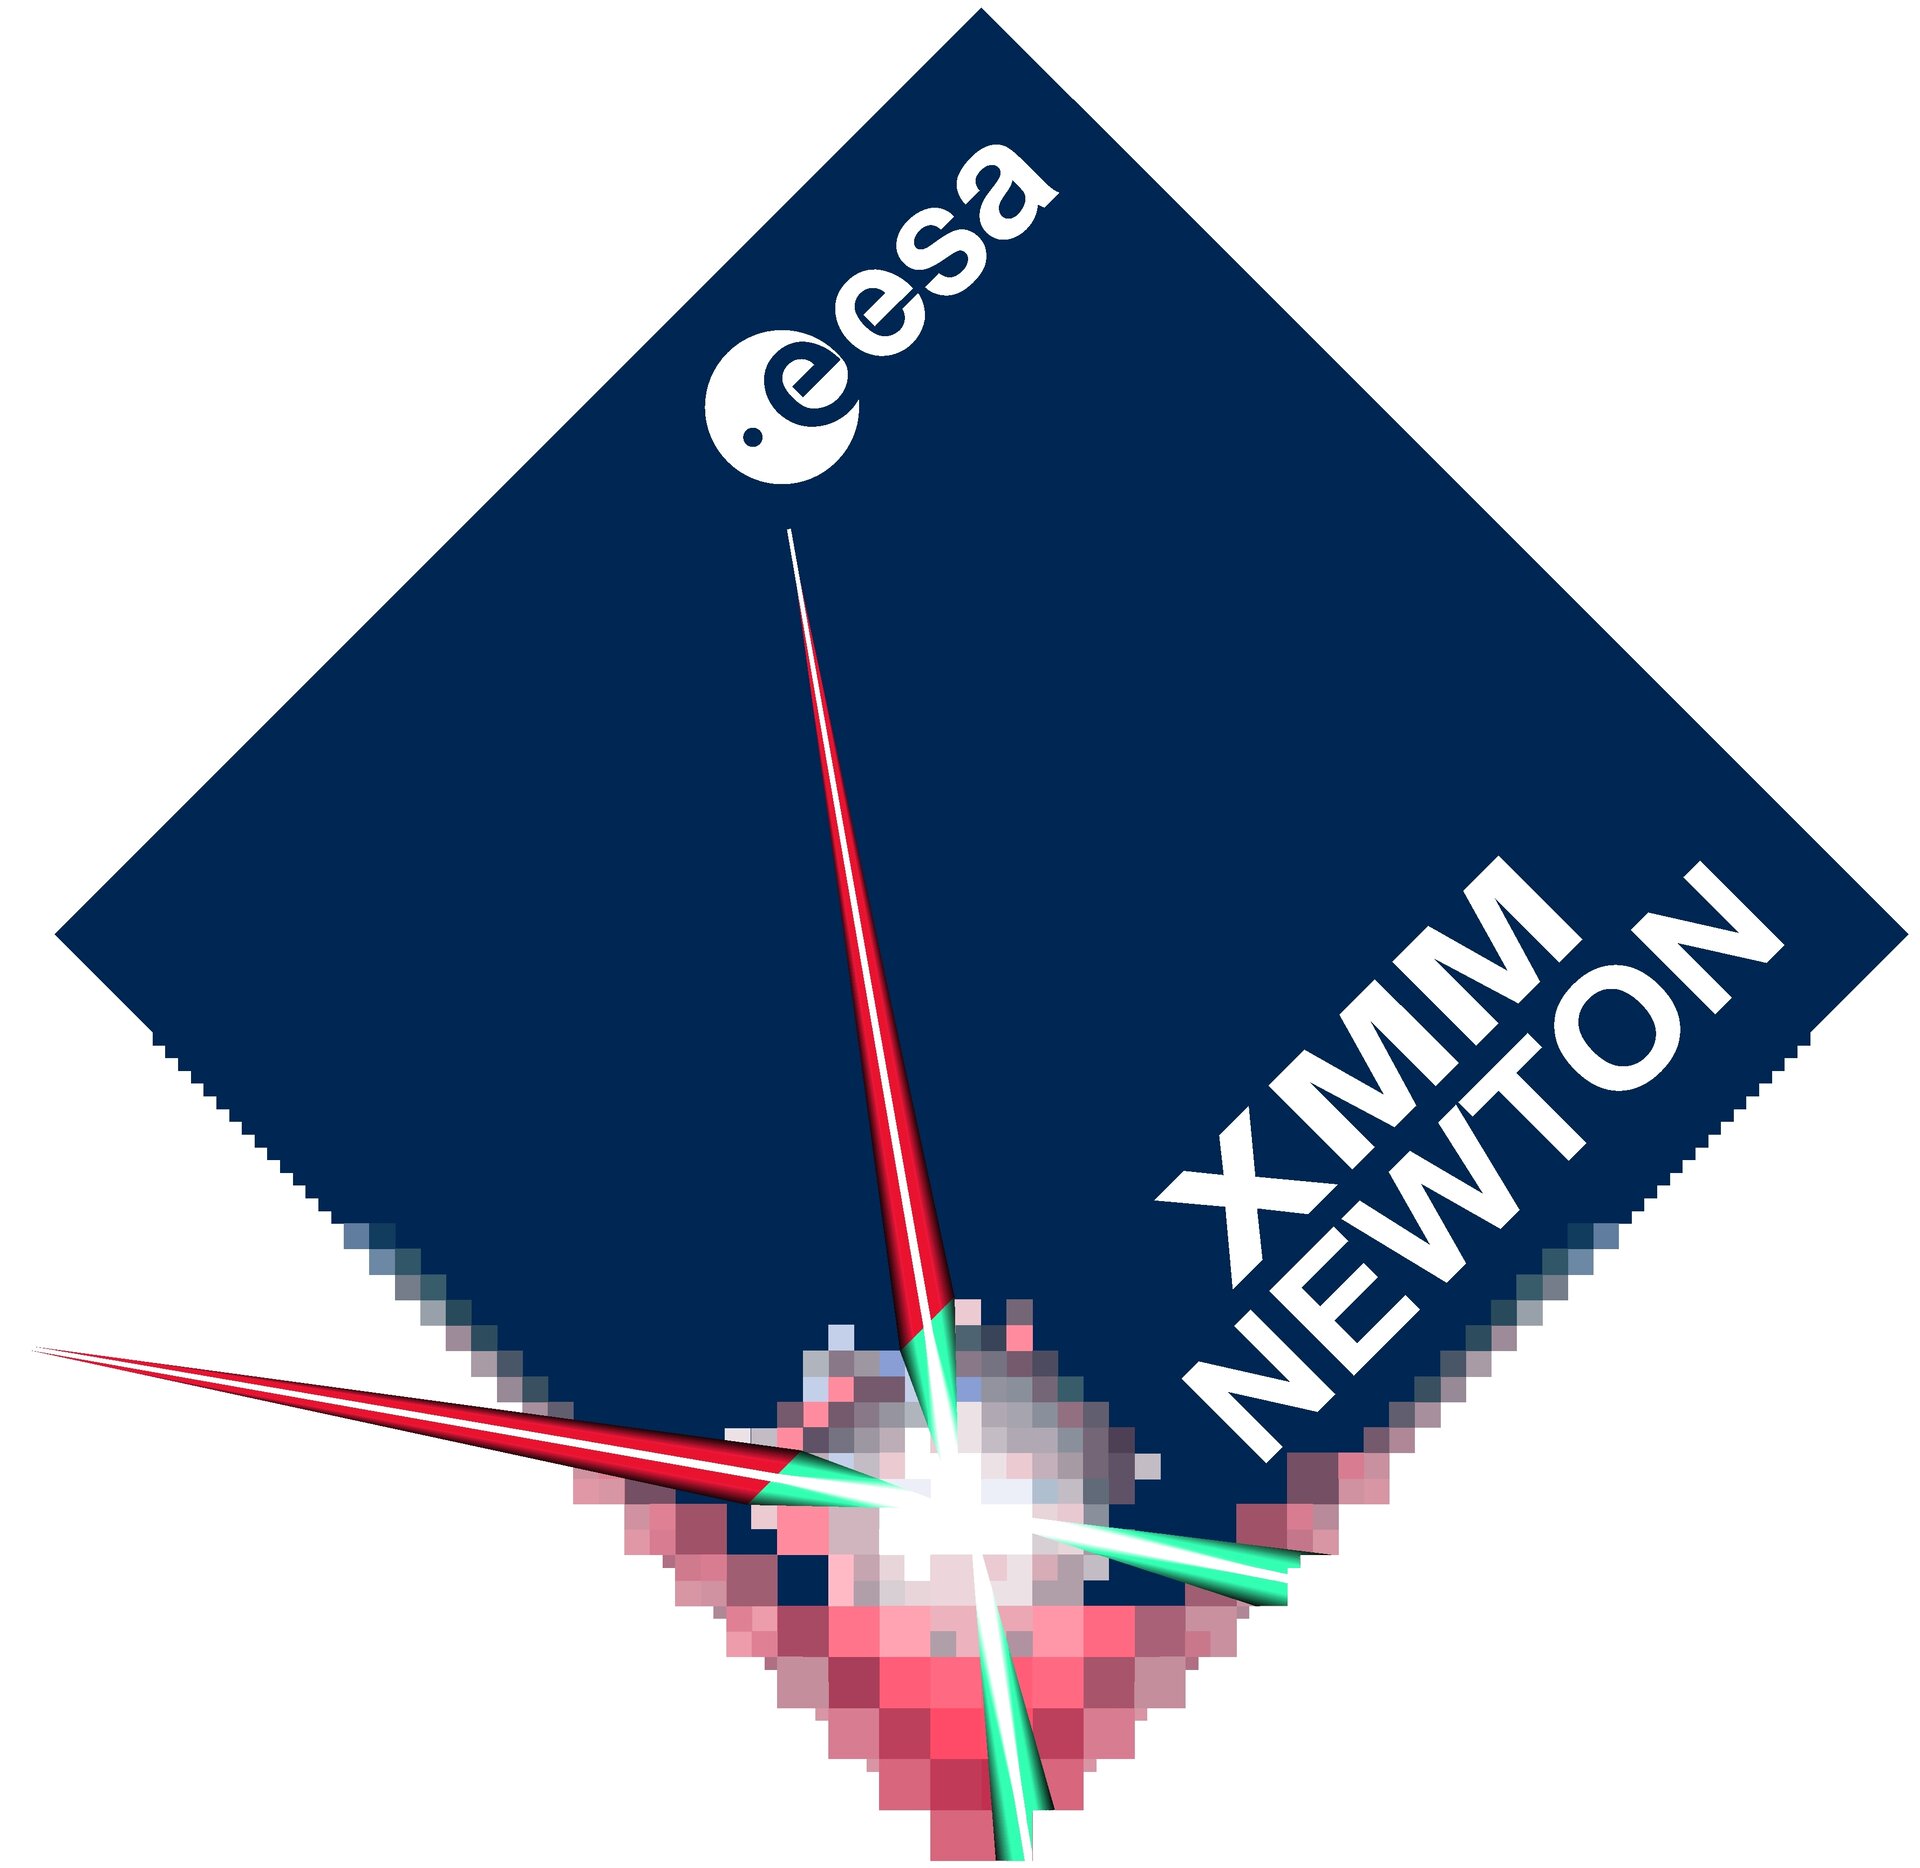 XMM-Newton logo